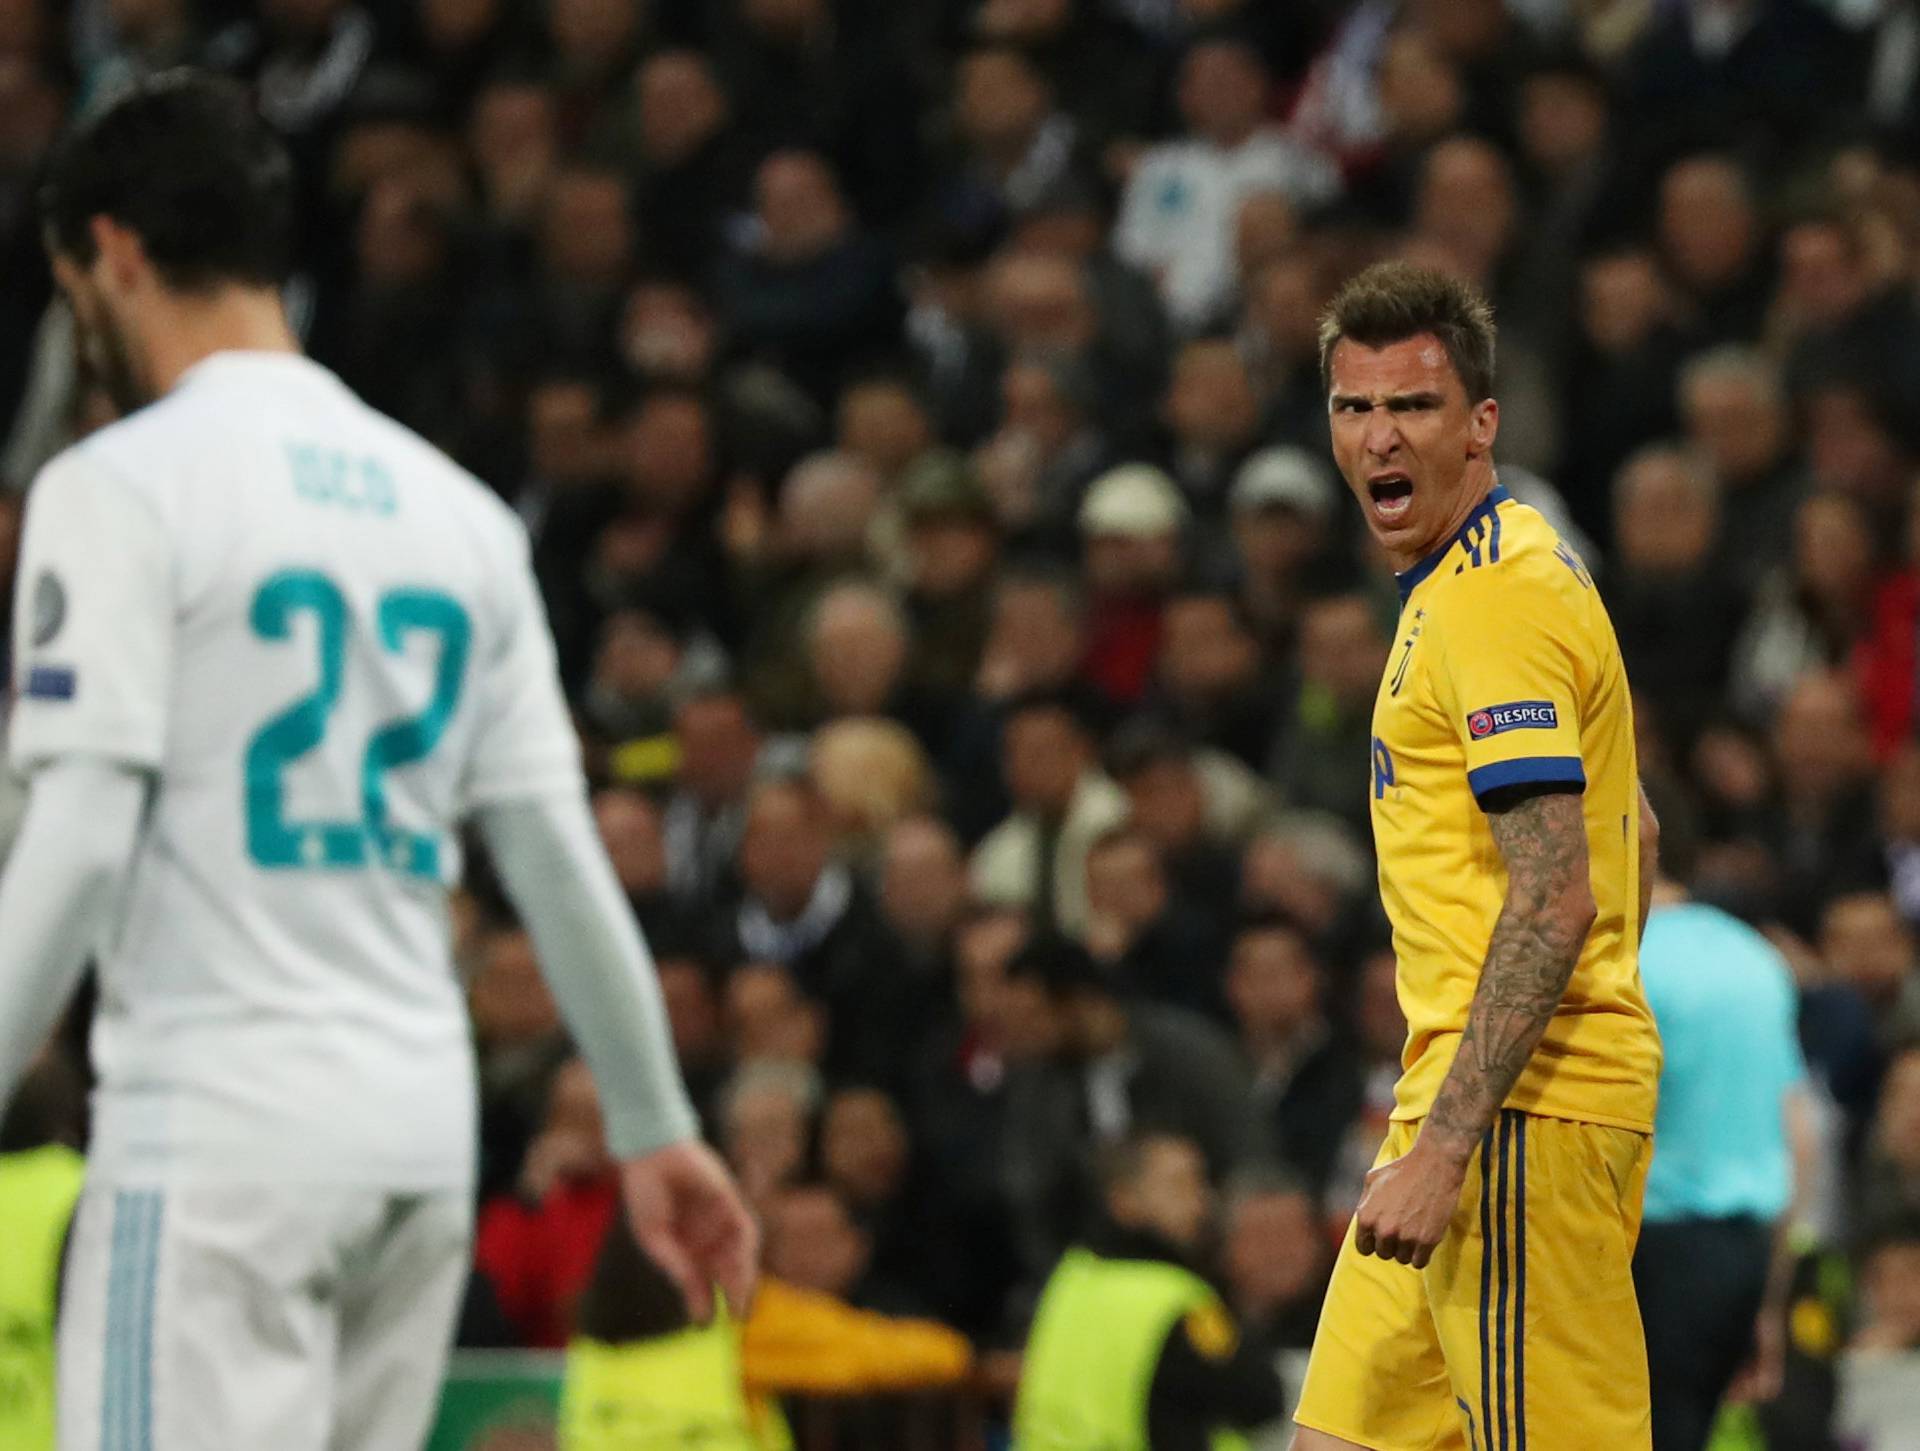 Champions League Quarter Final Second Leg - Real Madrid vs Juventus